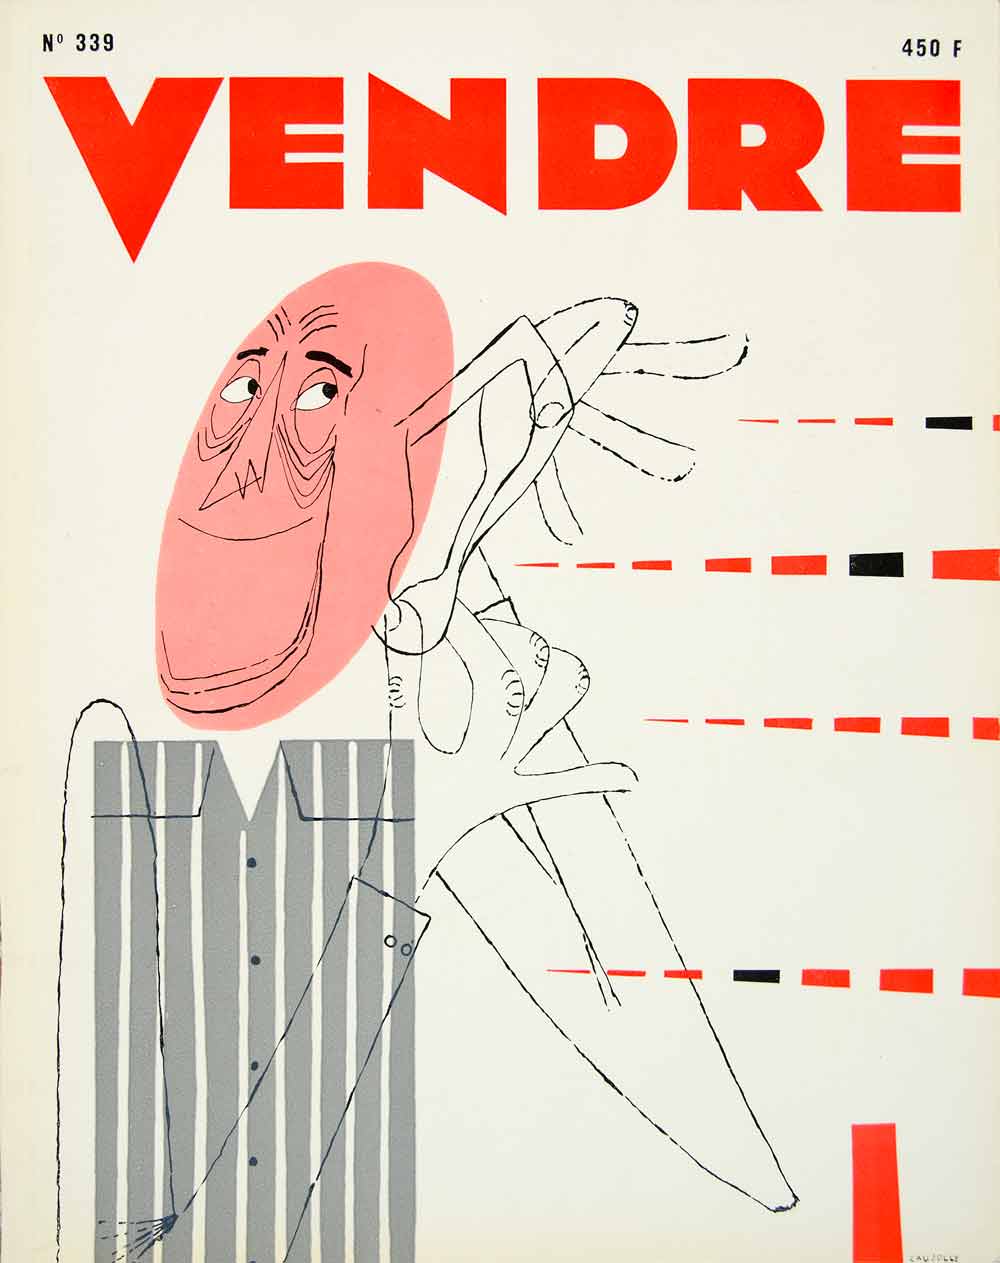 1958 Cover Vendre French Magazine Claude Caujolle Art Artist Illustration VENA1